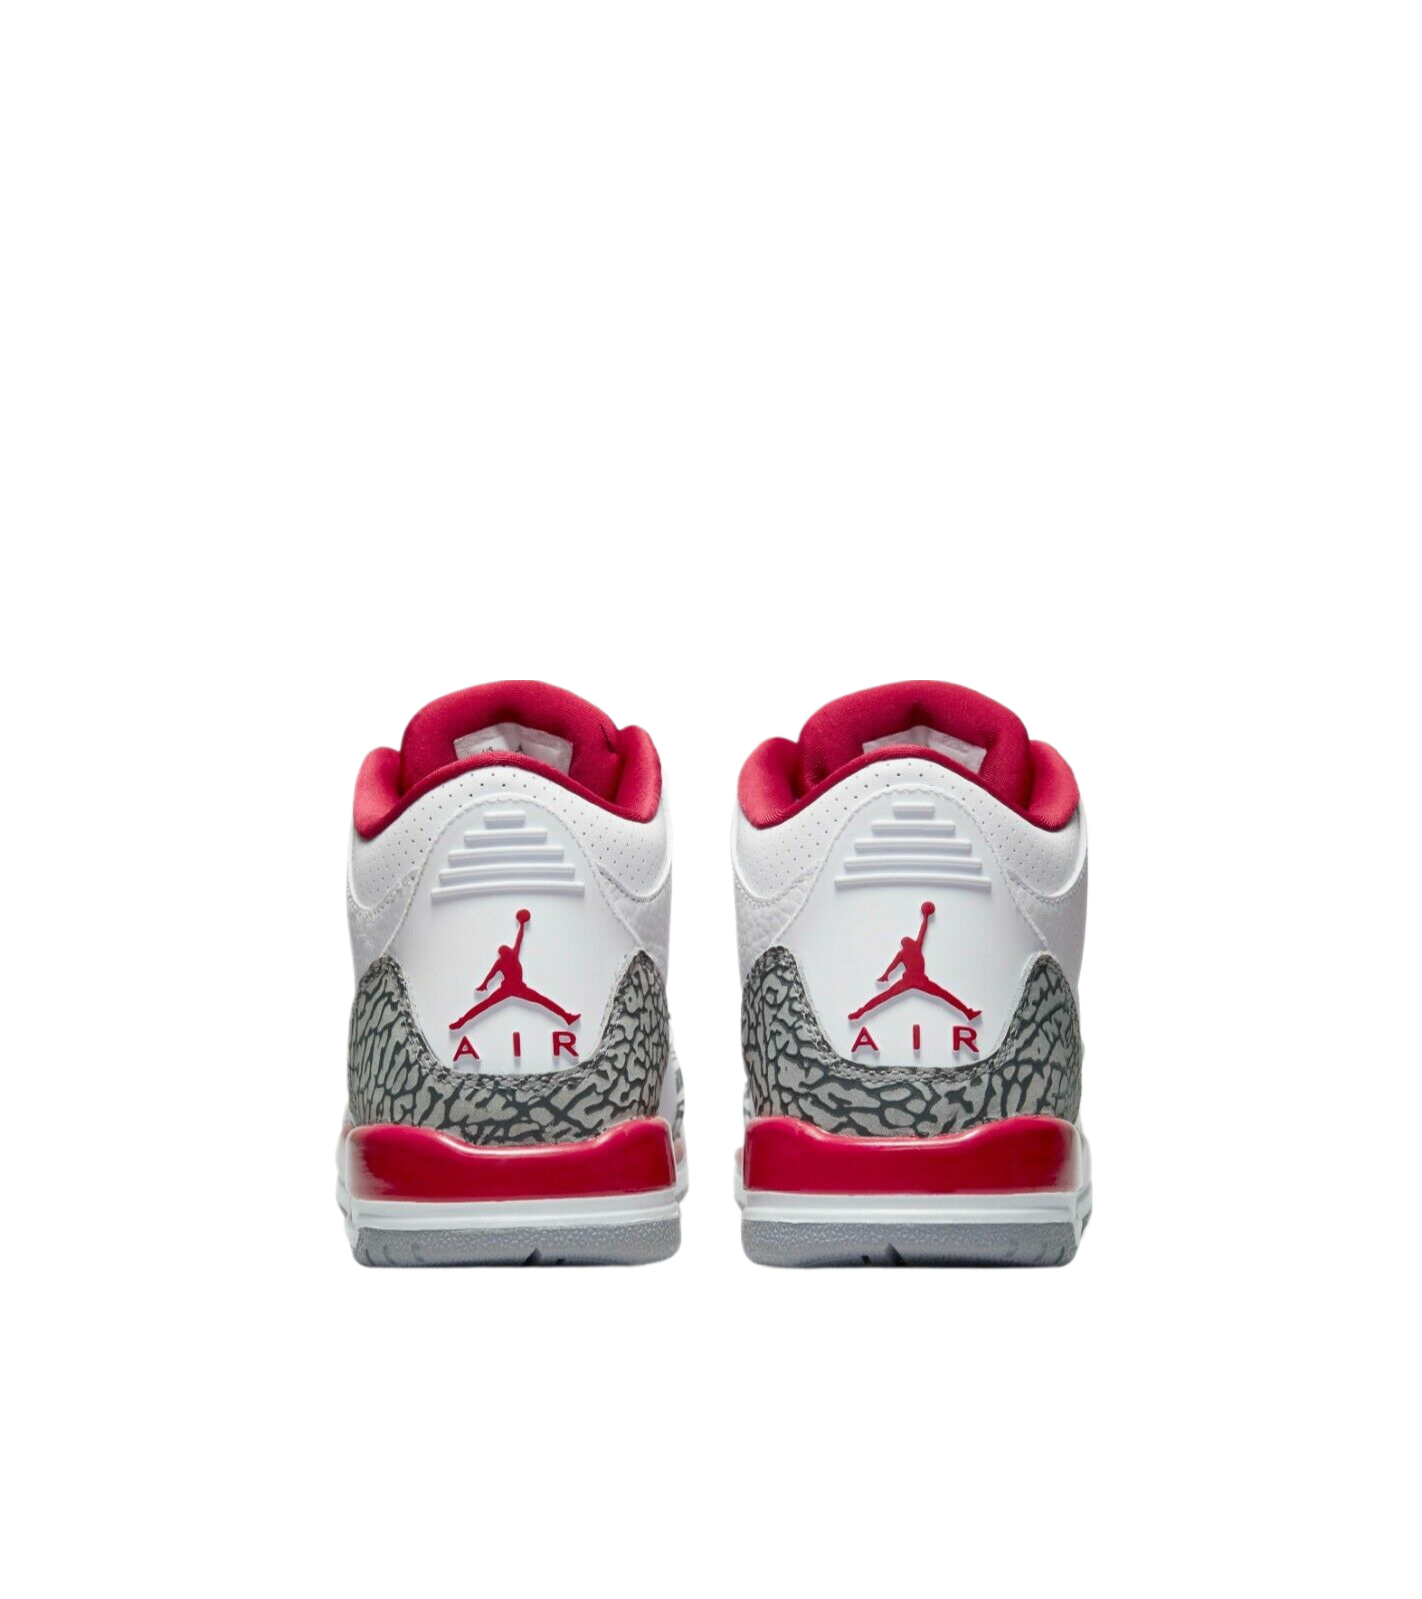 Air Jordan 3 Retro (GS) Shoes White/Light Curry-Cardinal Red 398614-126